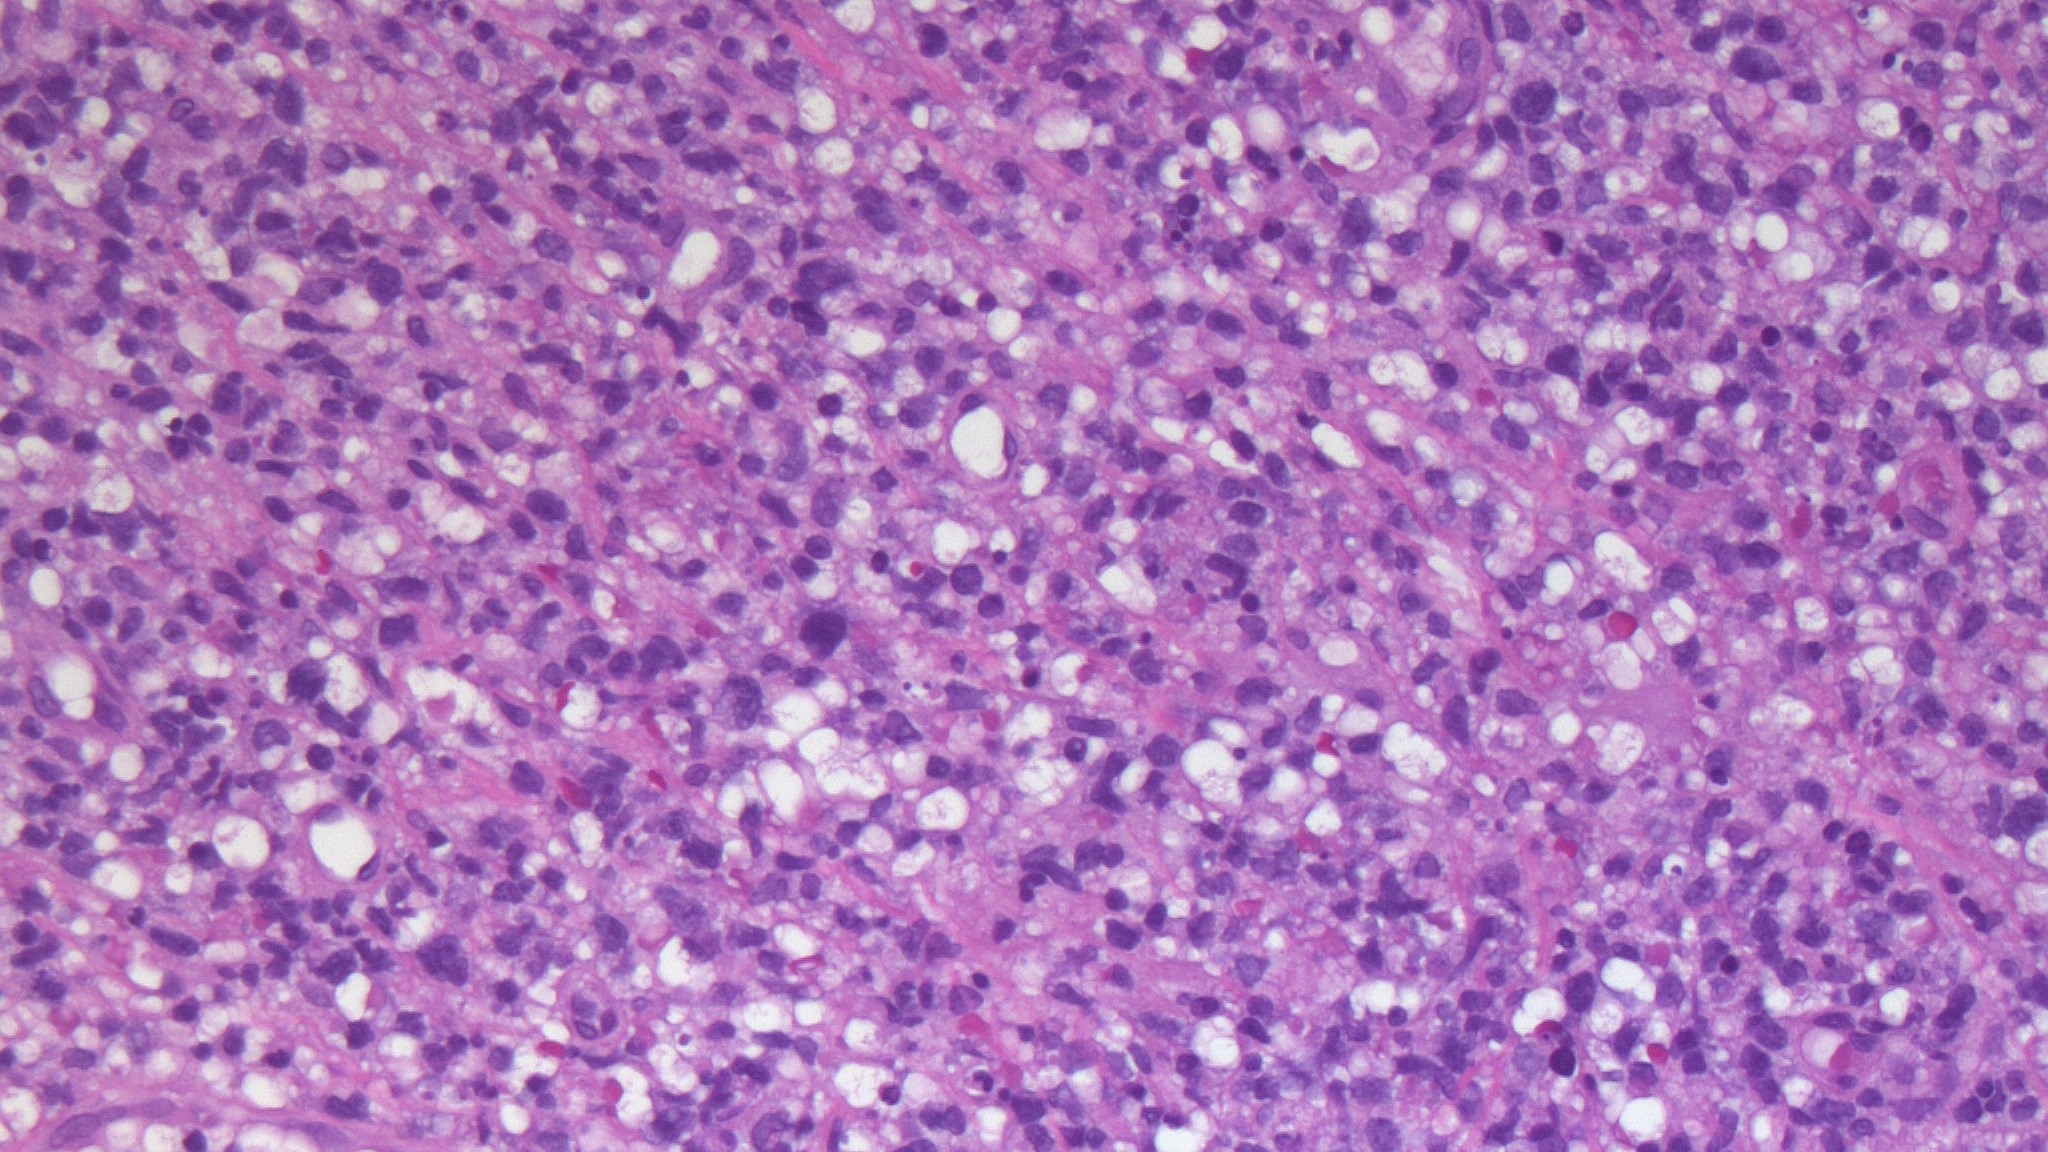 Extranodal NK/T cell lymphoma